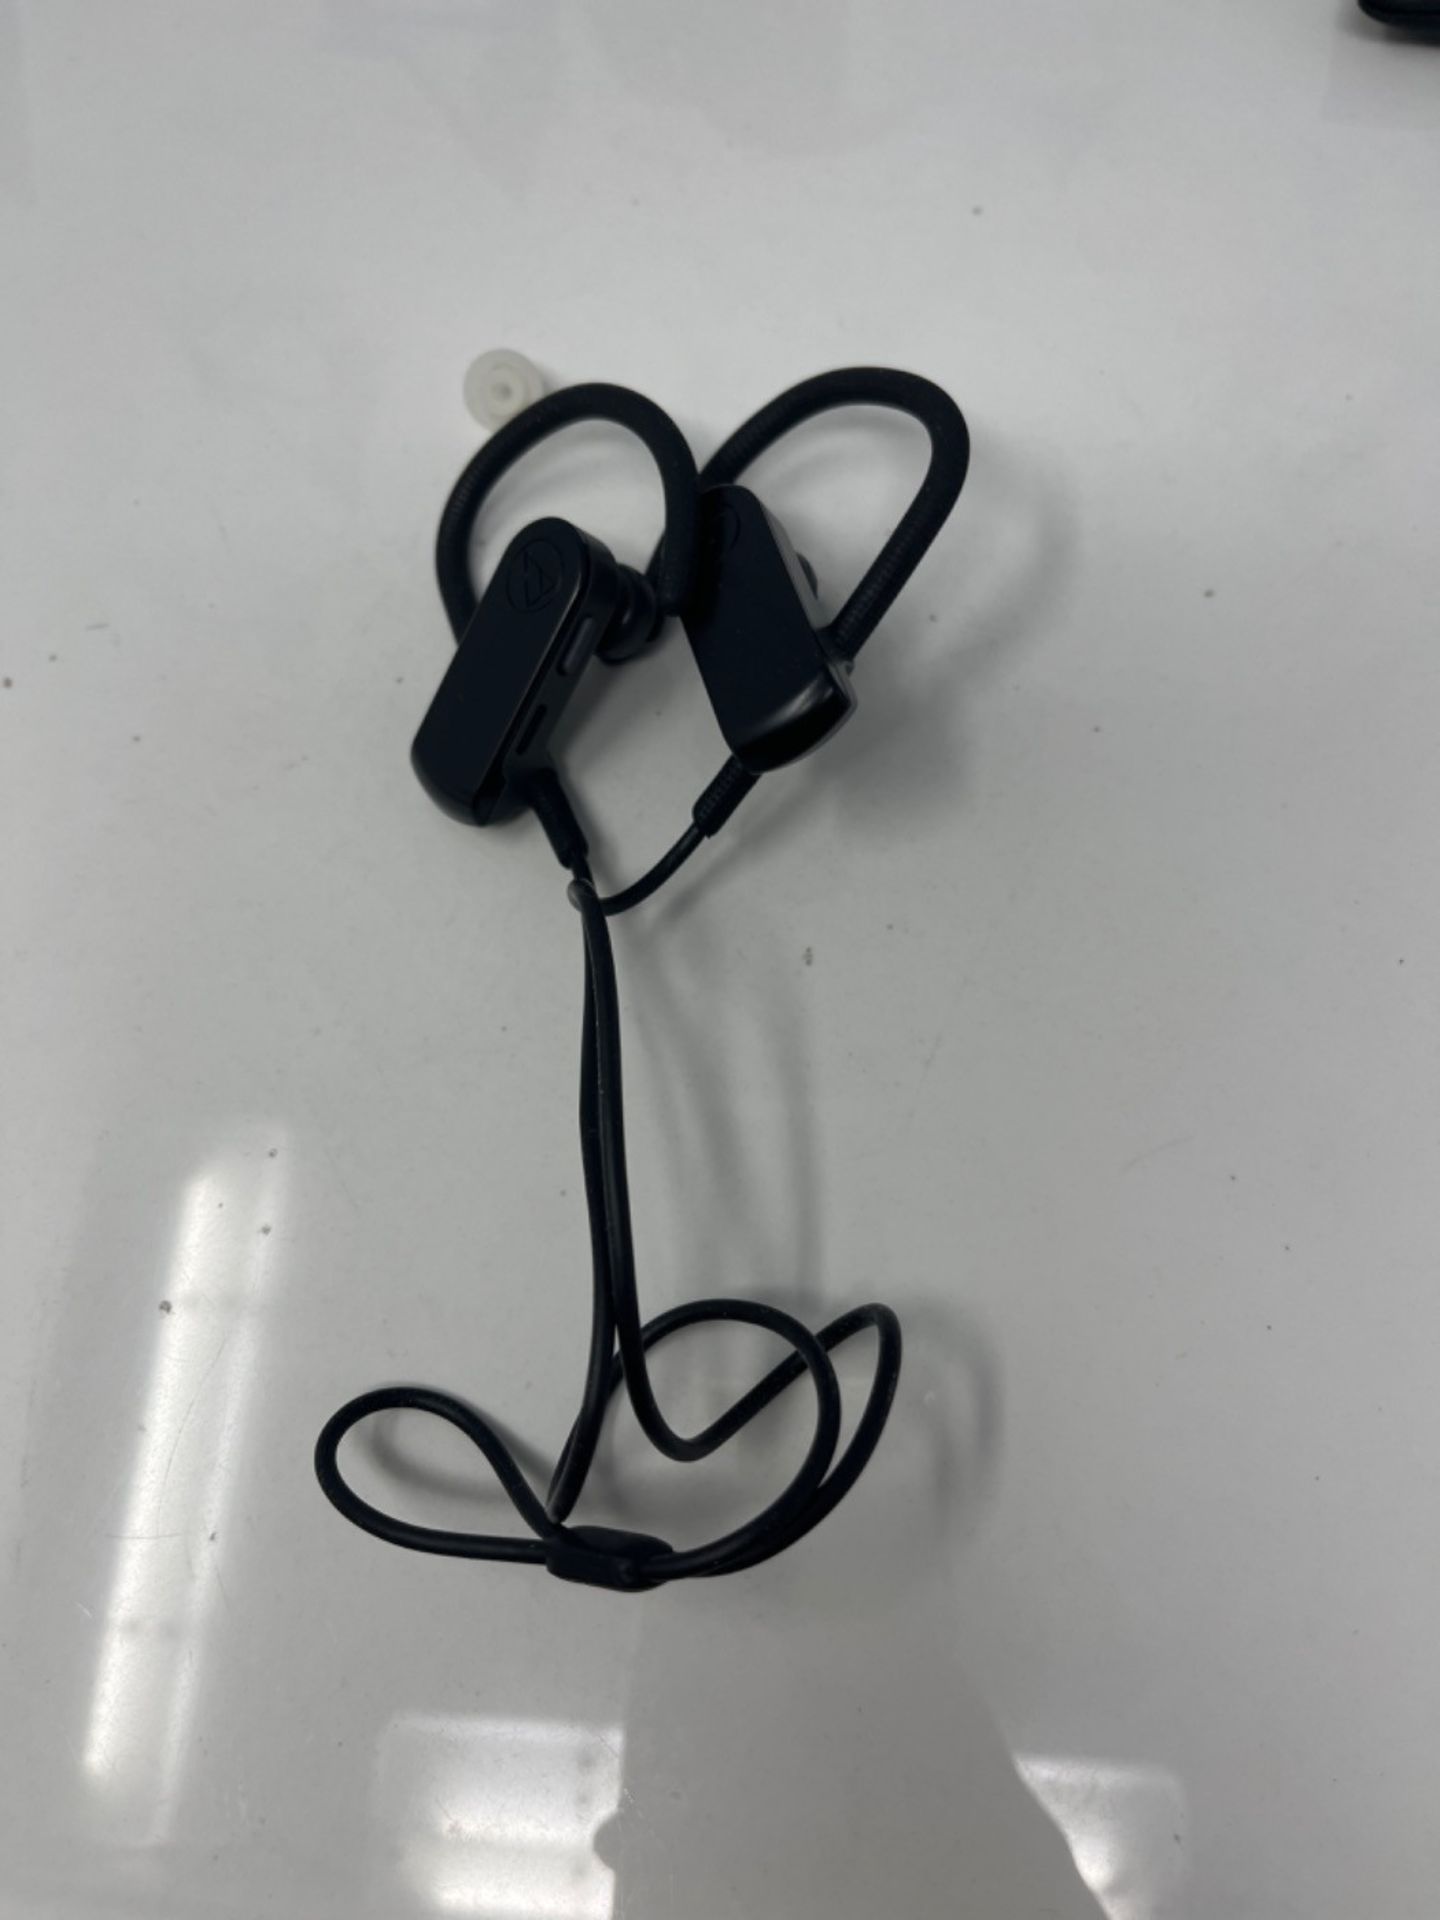 Audio-Technica ATH-SPORT50BTBK Wireless Bluetooth connection Earbuds Headphones Black - Image 3 of 3